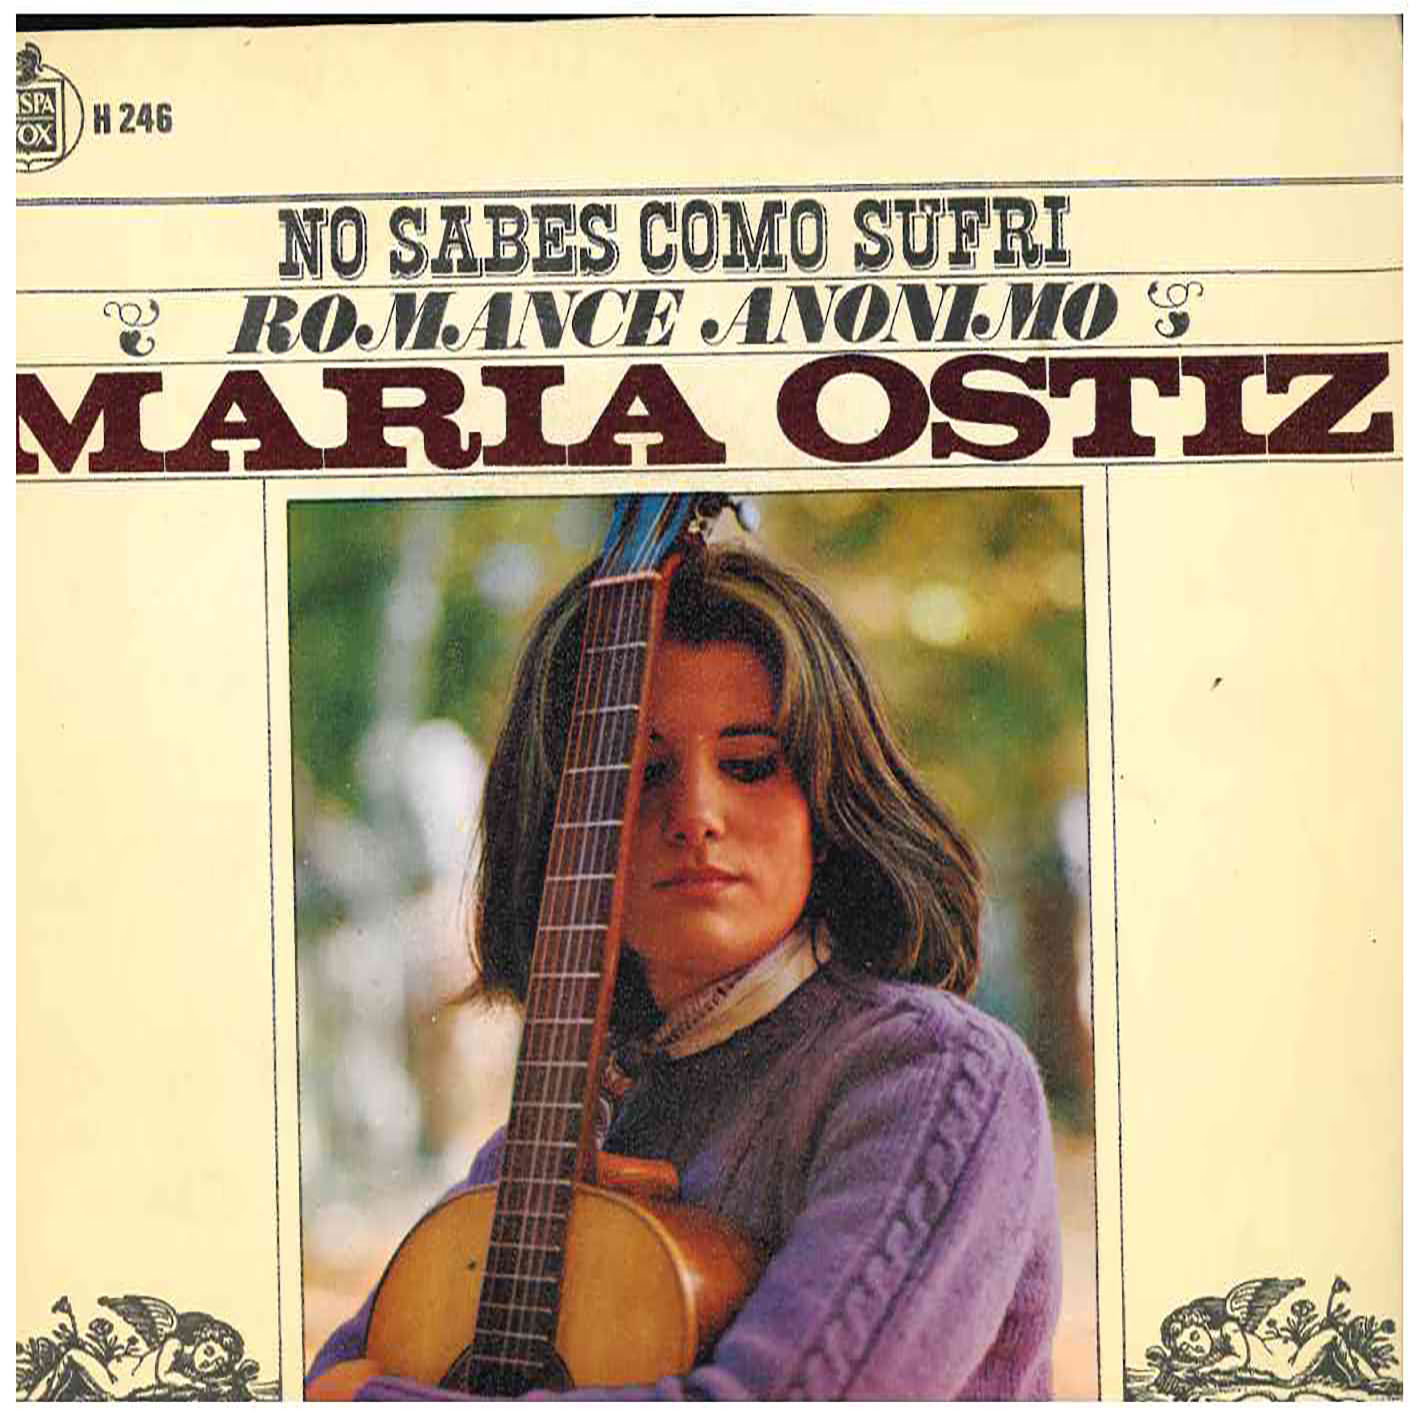 Maria Ostiz – No Sabes Como Sufrí / Romance Anónimo